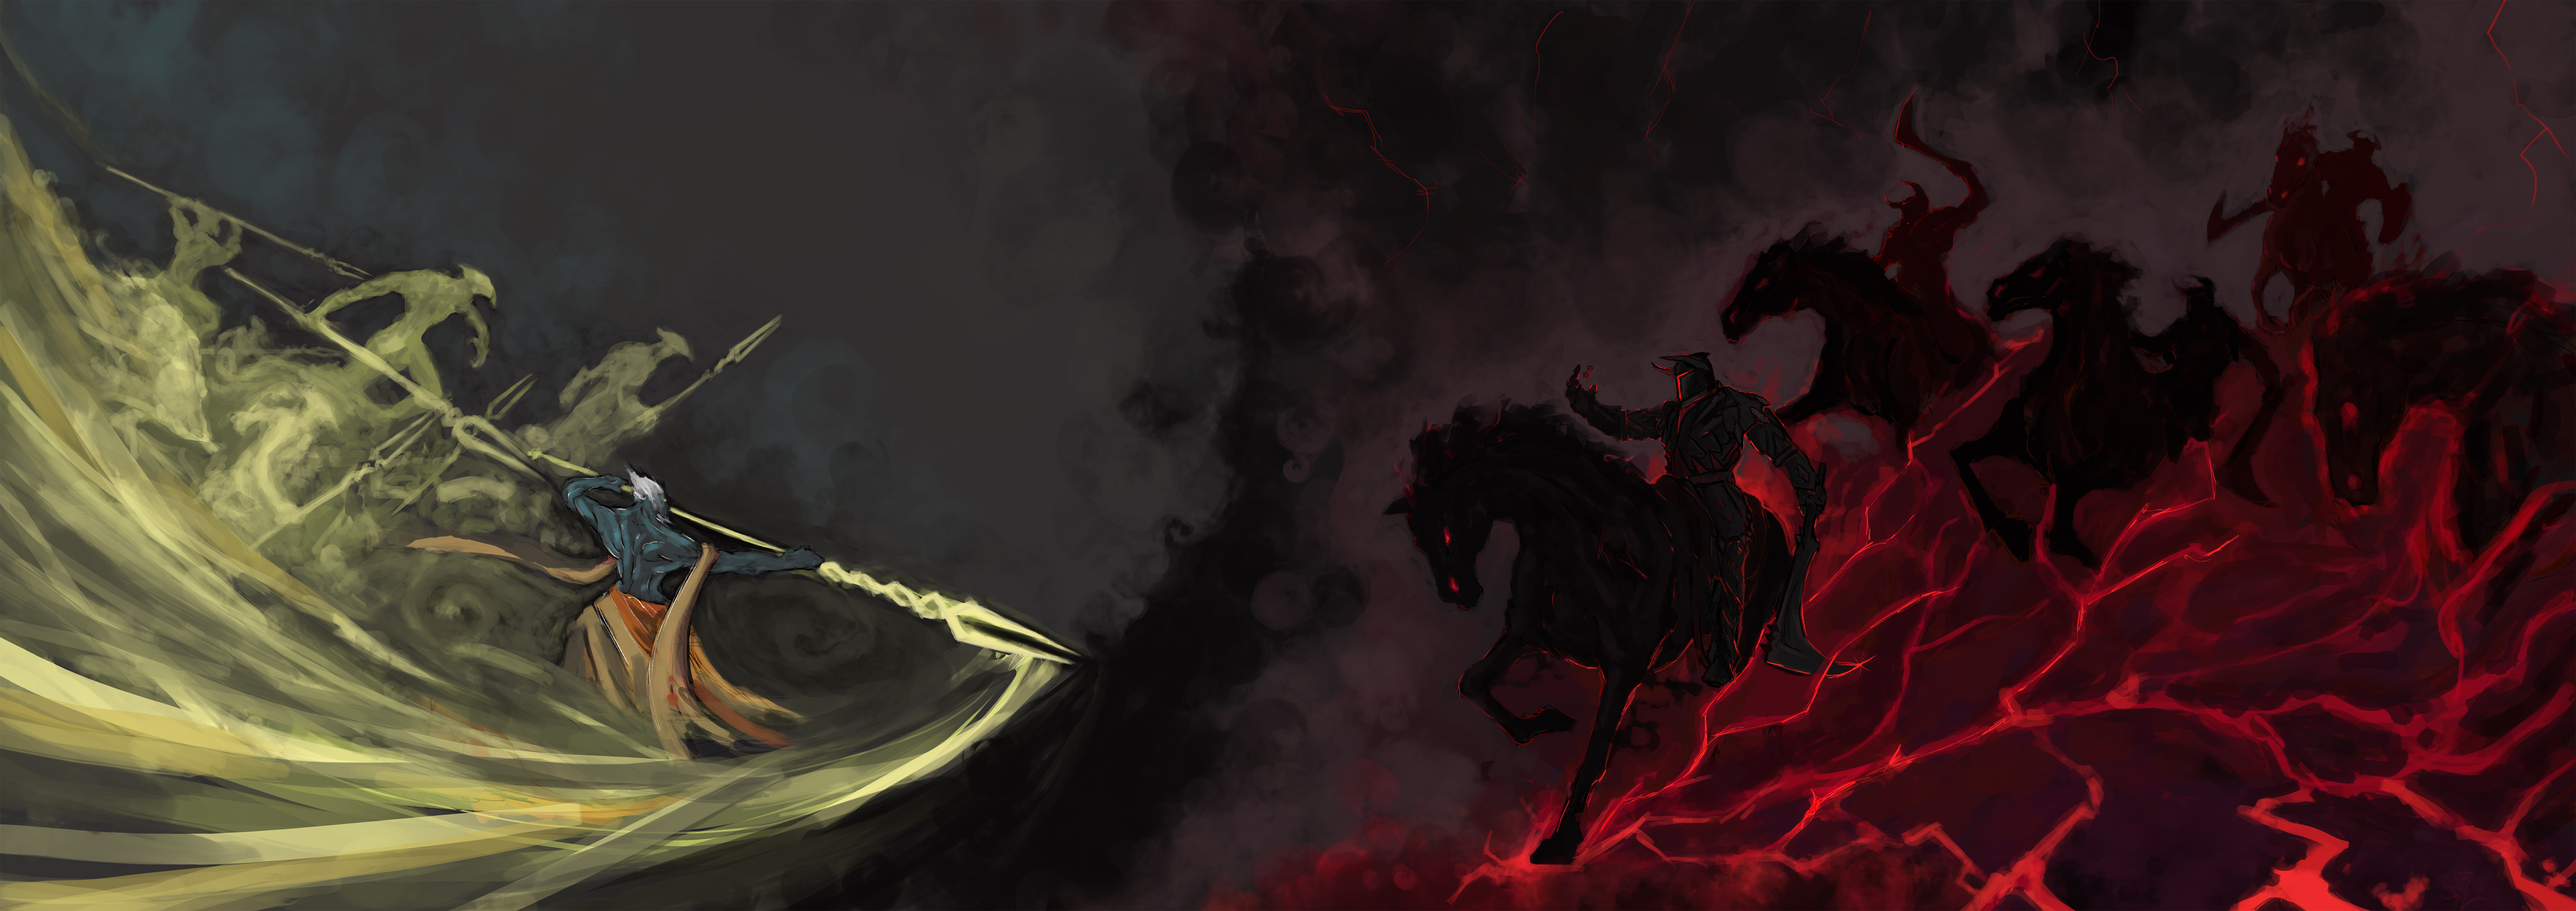 wallpaper para 2 monitores,cg artwork,demon,horse,darkness,illustration